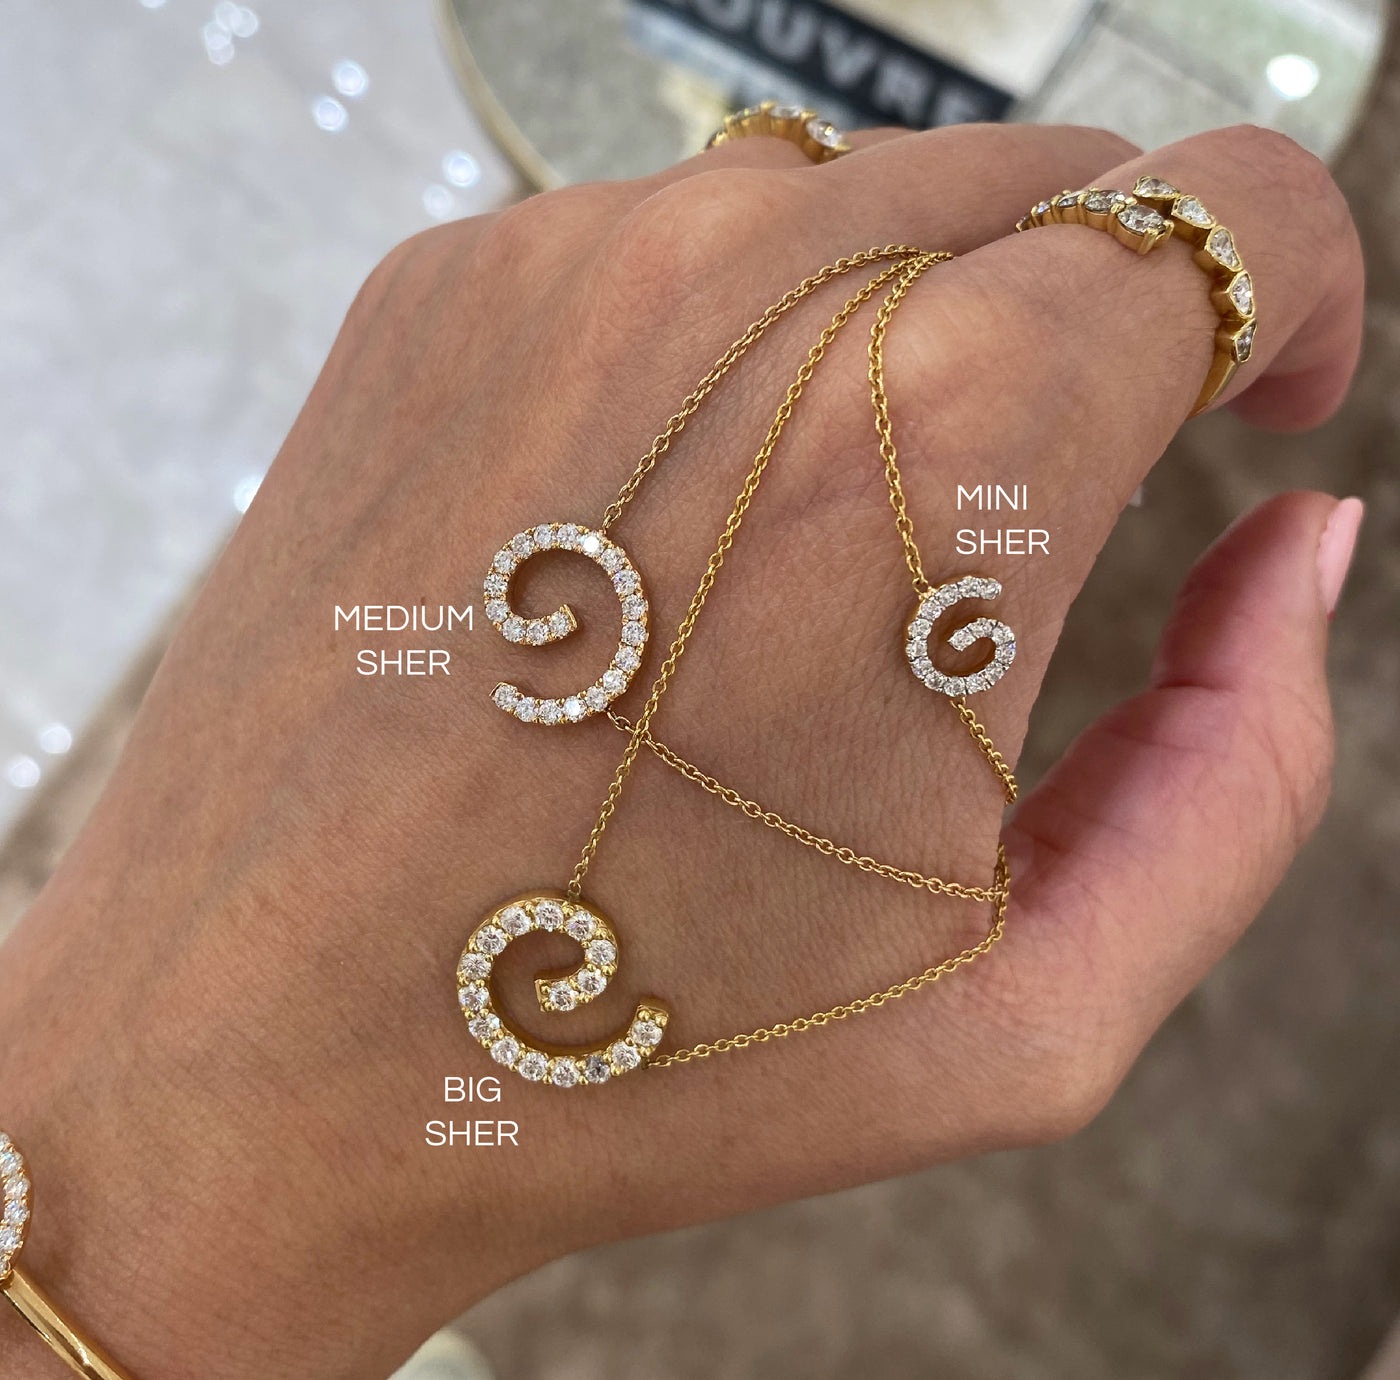 Medium SHER Spiral Necklace